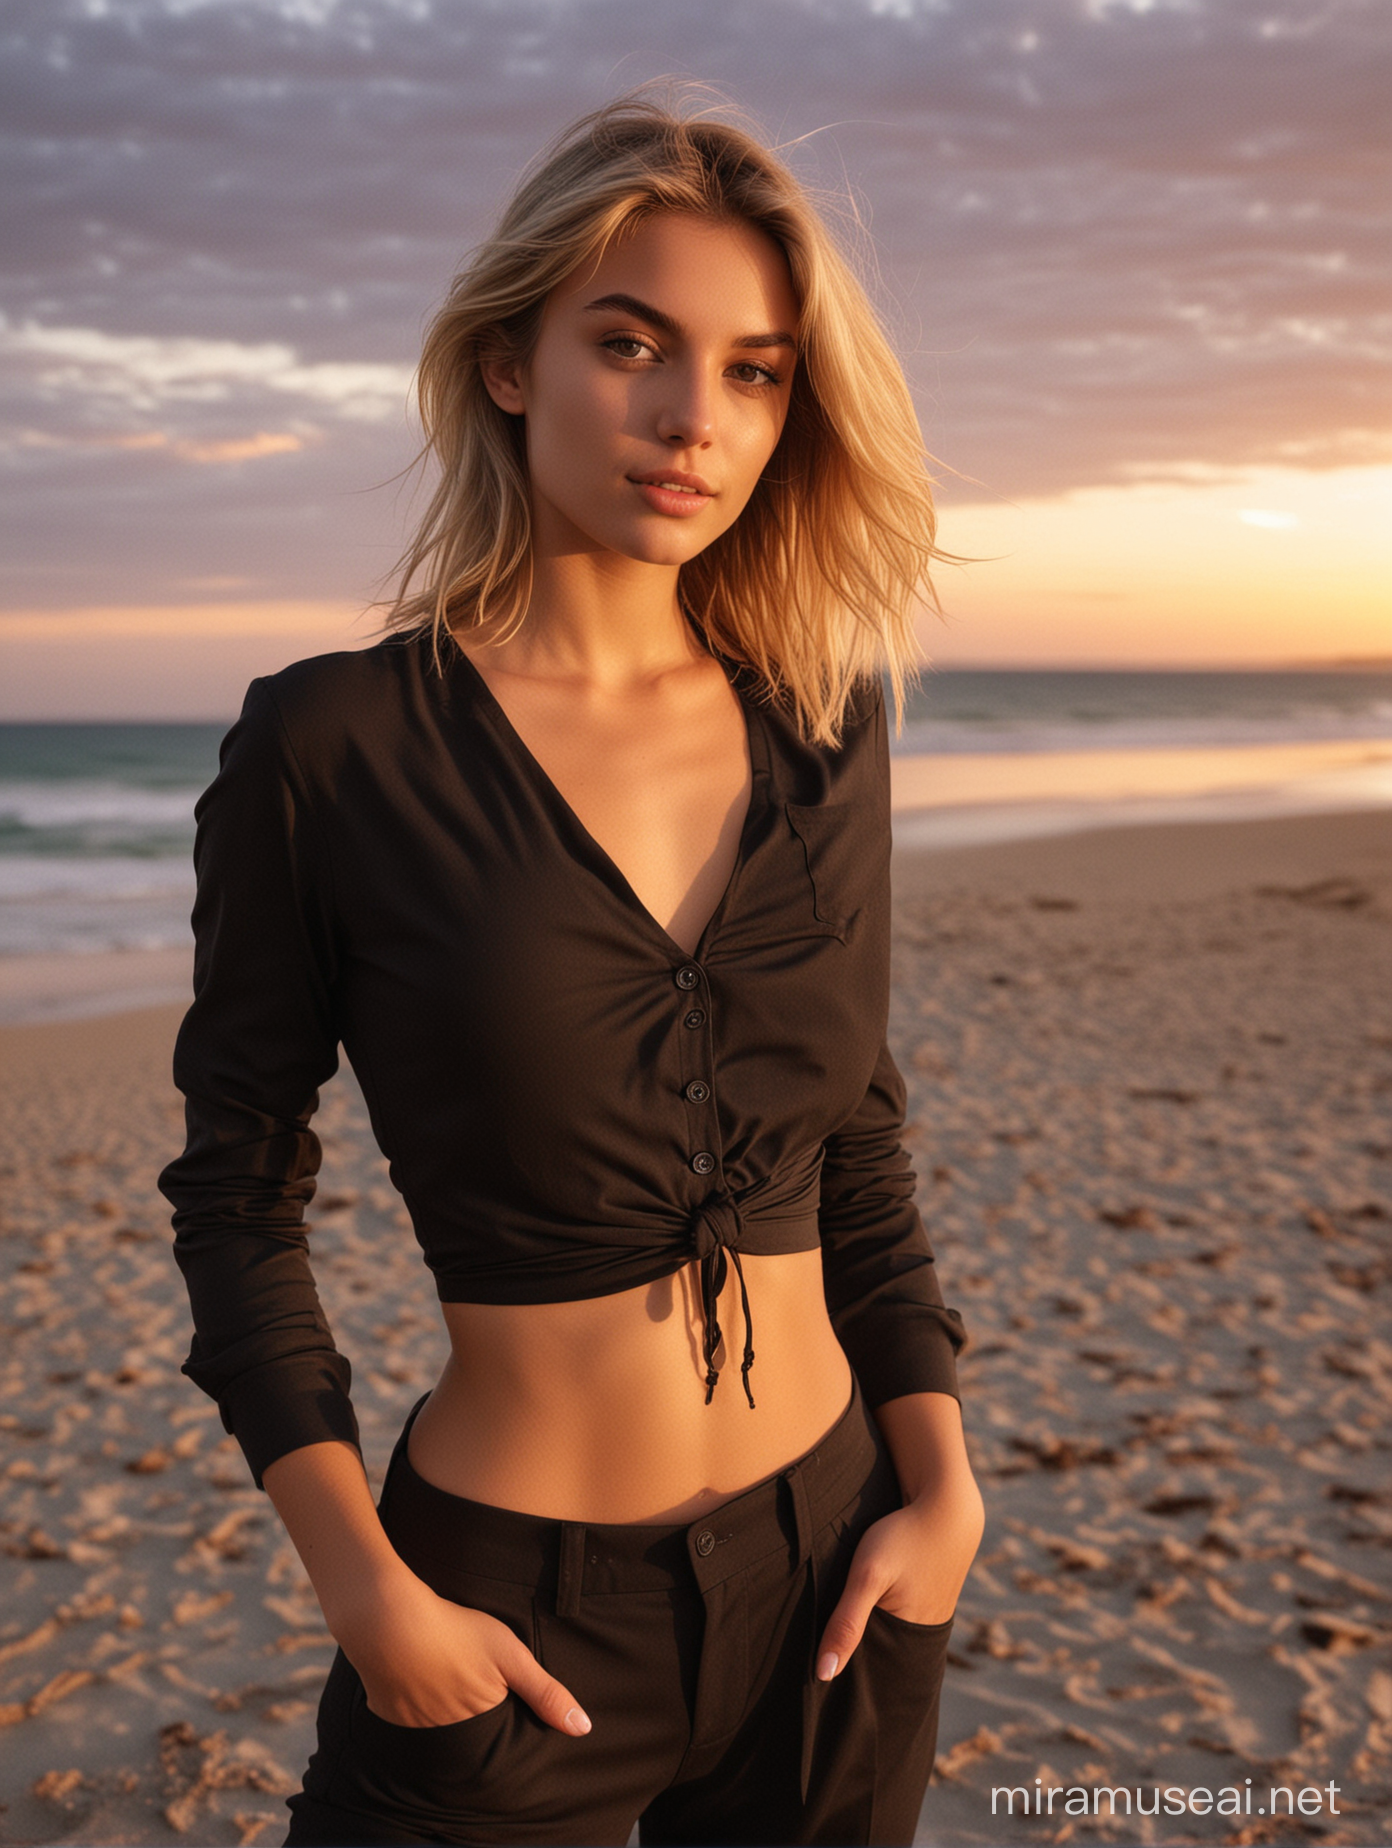 ItalianAustralian Girl with Blonde Hair Posing on Australian Beach at Sunset